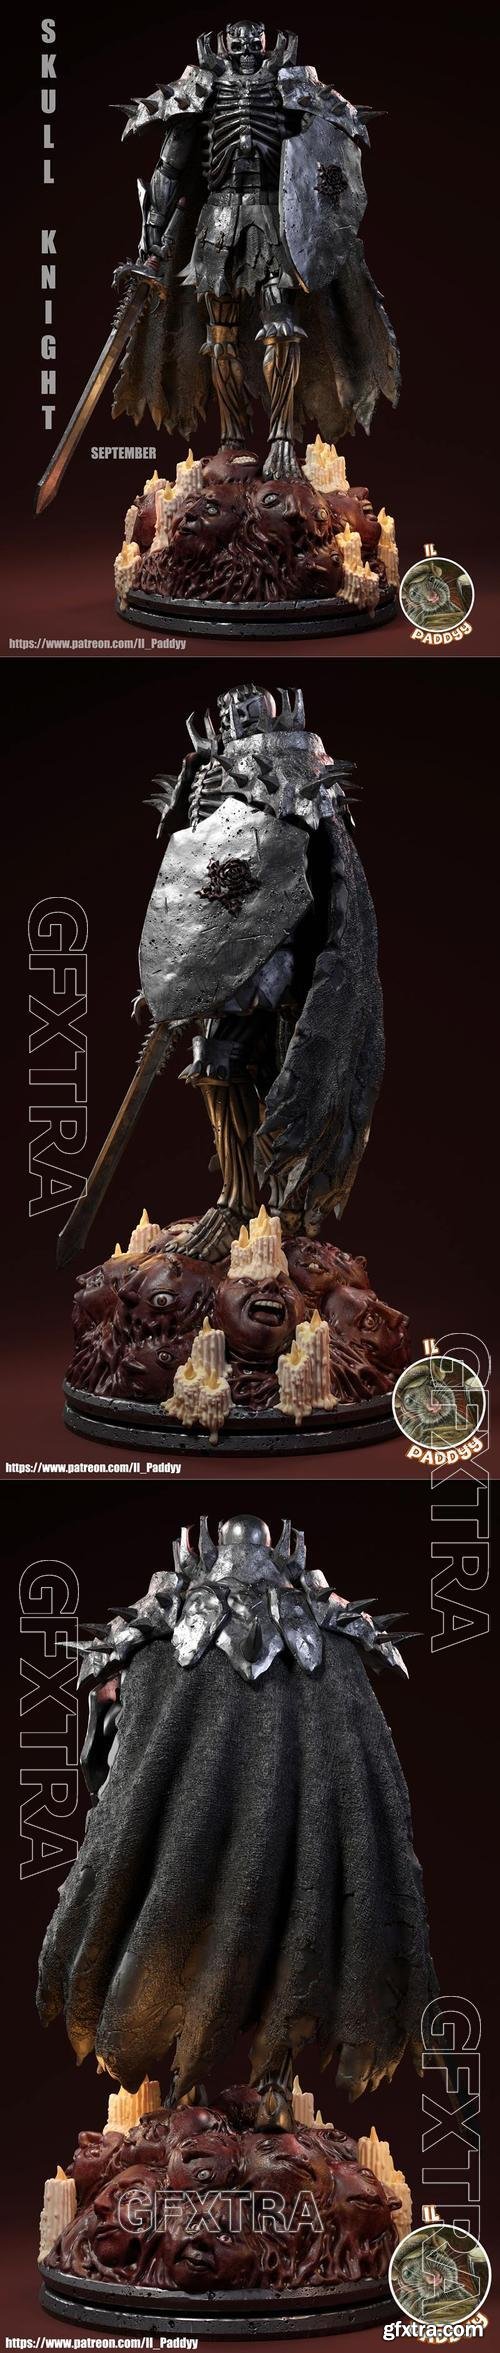 Il Paddyy - Skull Knight from Berserk &ndash; 3D Print Model